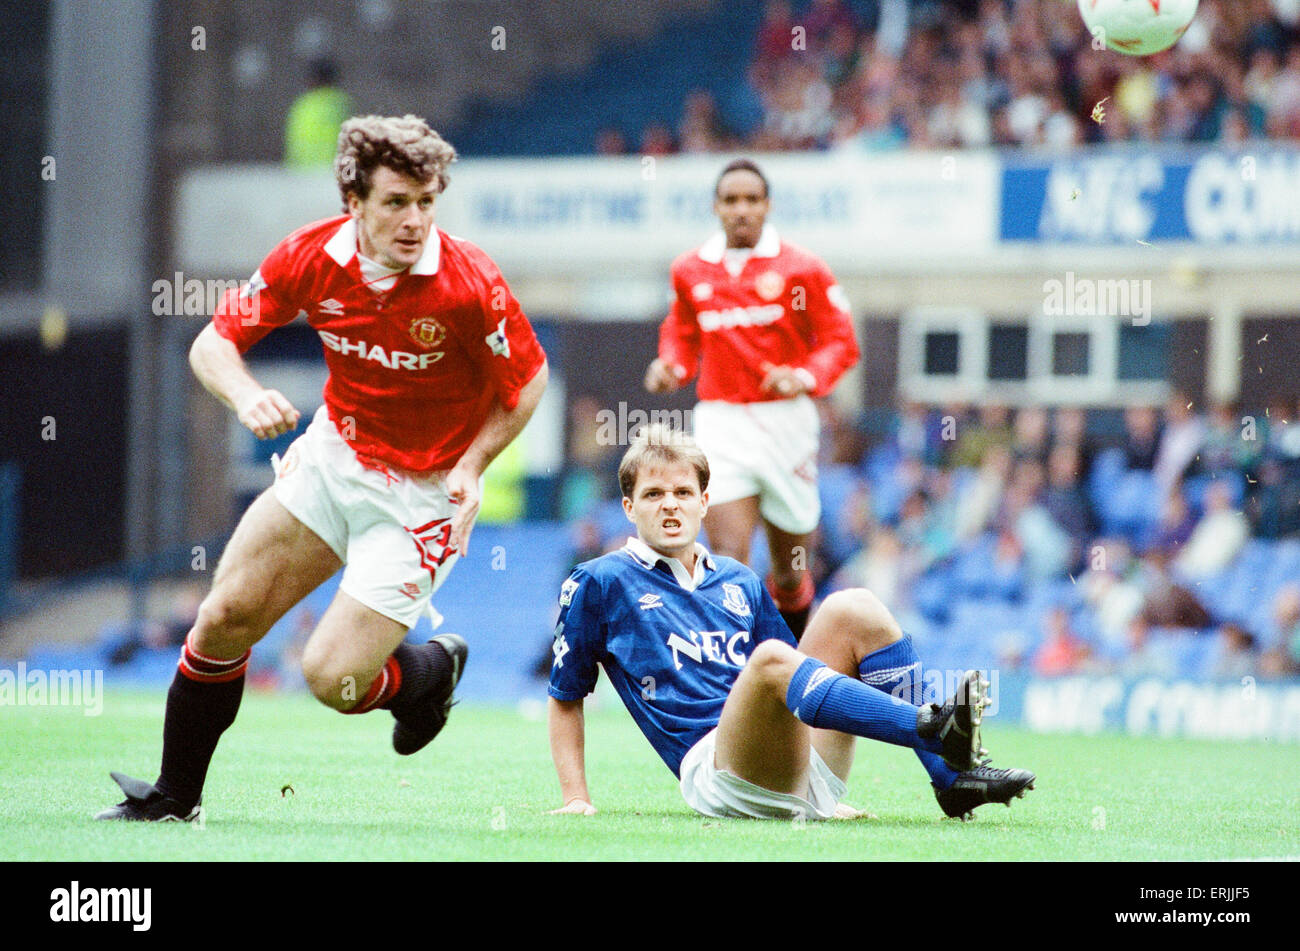 Everton 0-2 Manchester United, league a Goodison Park, sabato 12 settembre 1992. Mark Hughes e John Ebbrell. Foto Stock